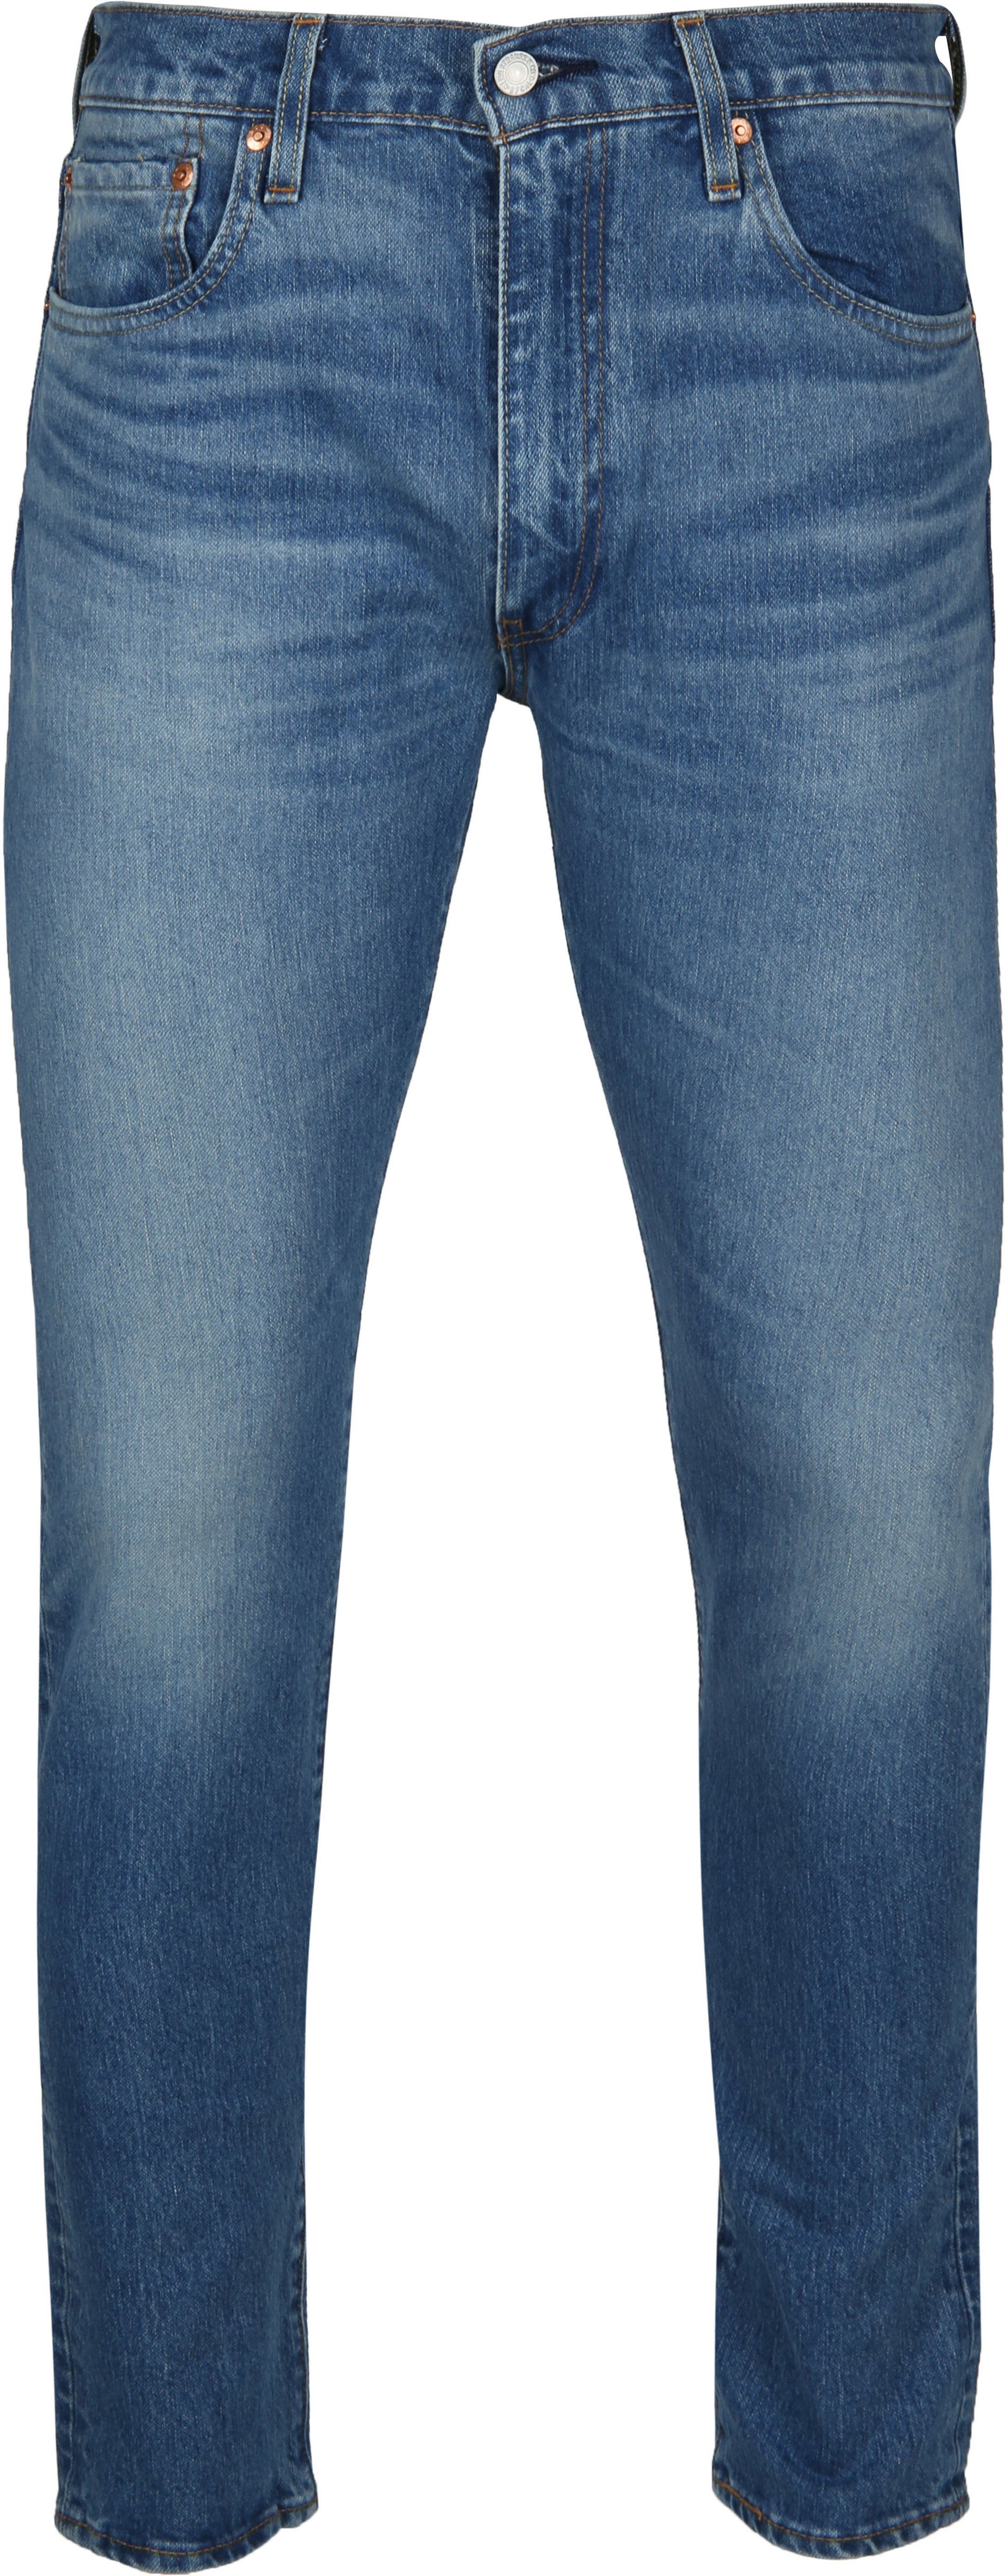 Levis - Levi’s 512 jeans slim taper fit blue size w 30